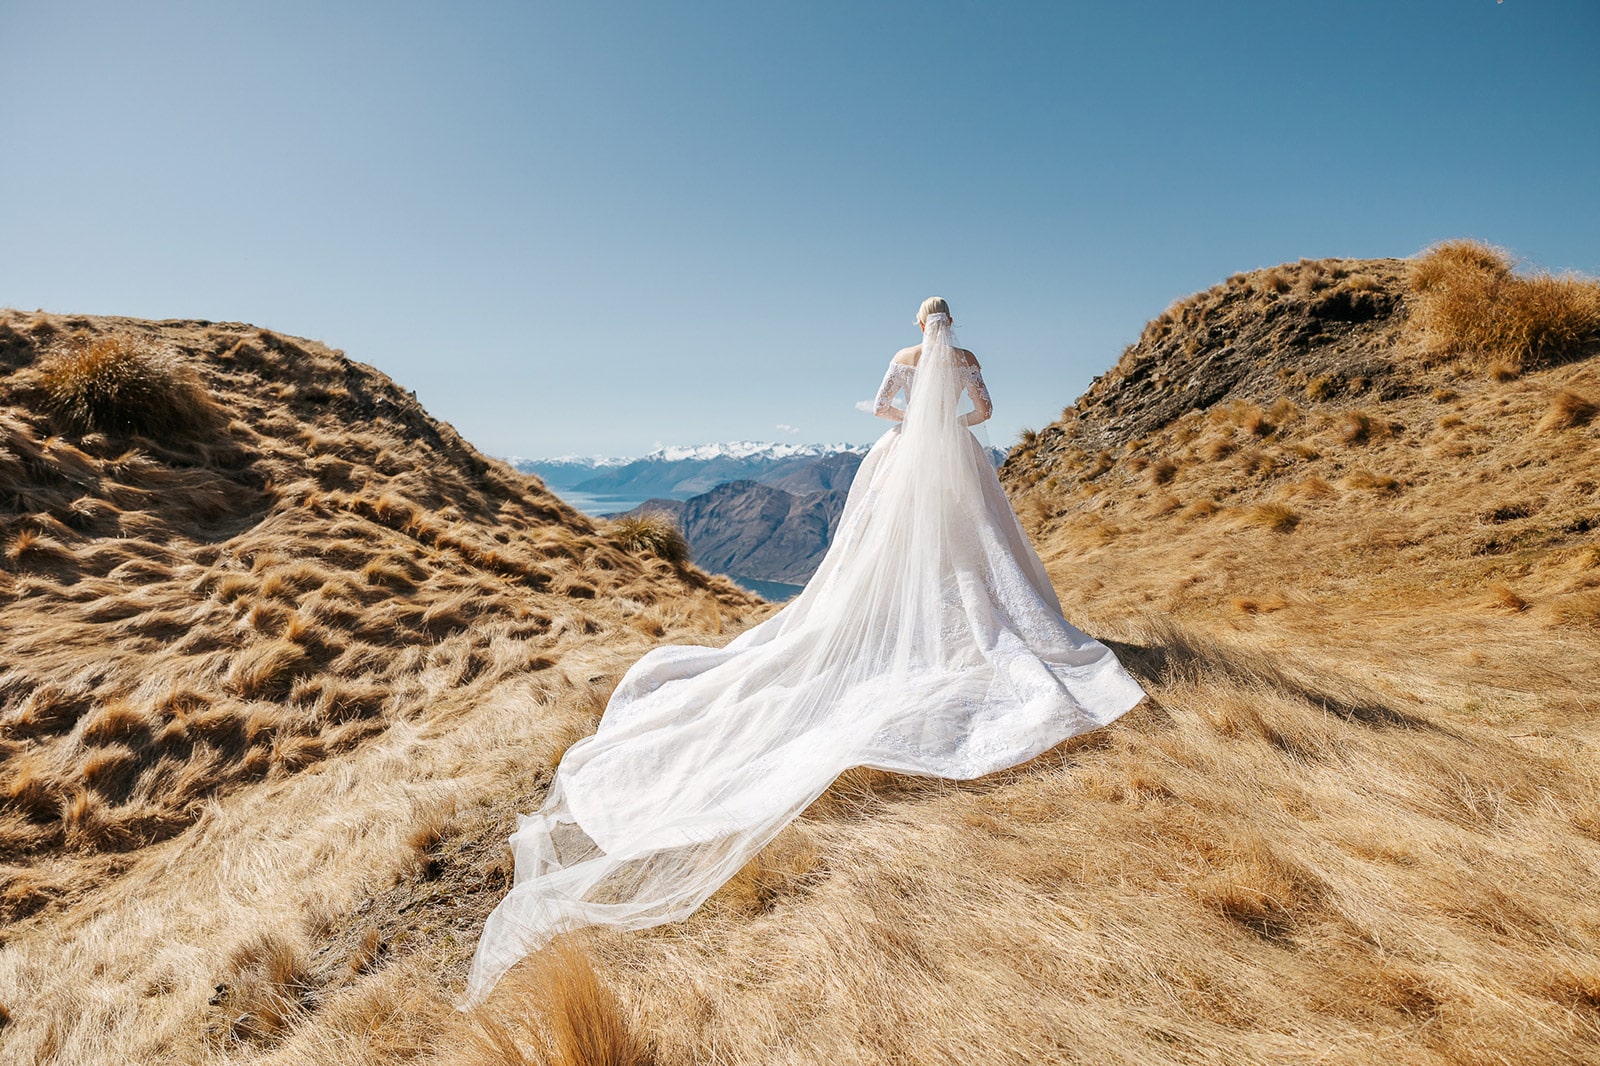 Heli Wedding on Coromandel Peak and Bride wearing a Steven khalil wedding dress at Queenstown Wedding